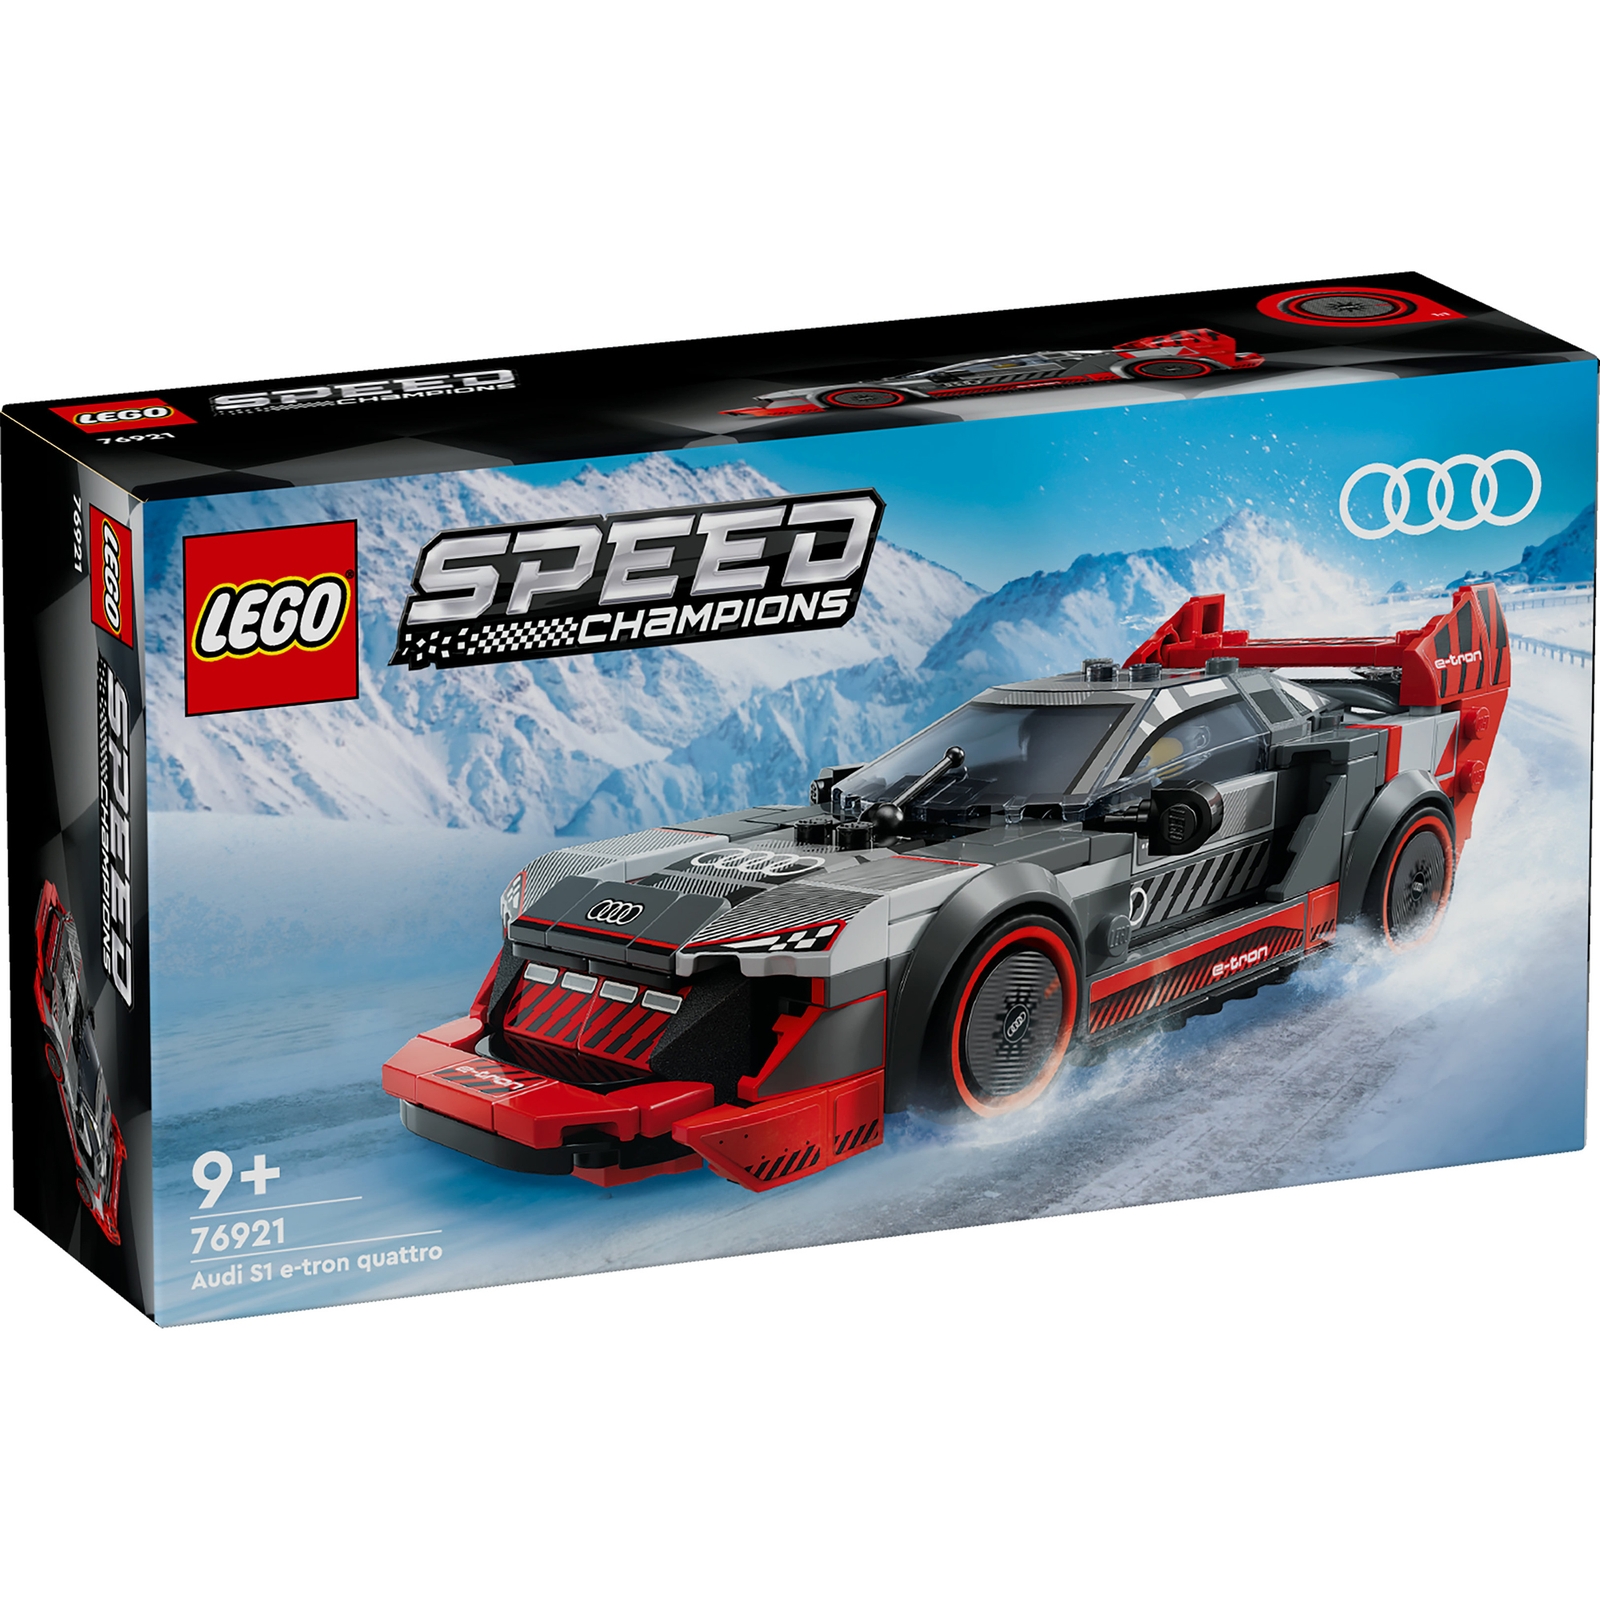 Image of 76921 LEGO® SPEED CHAMPIONS Audi S1 e-tron Quattro racing car